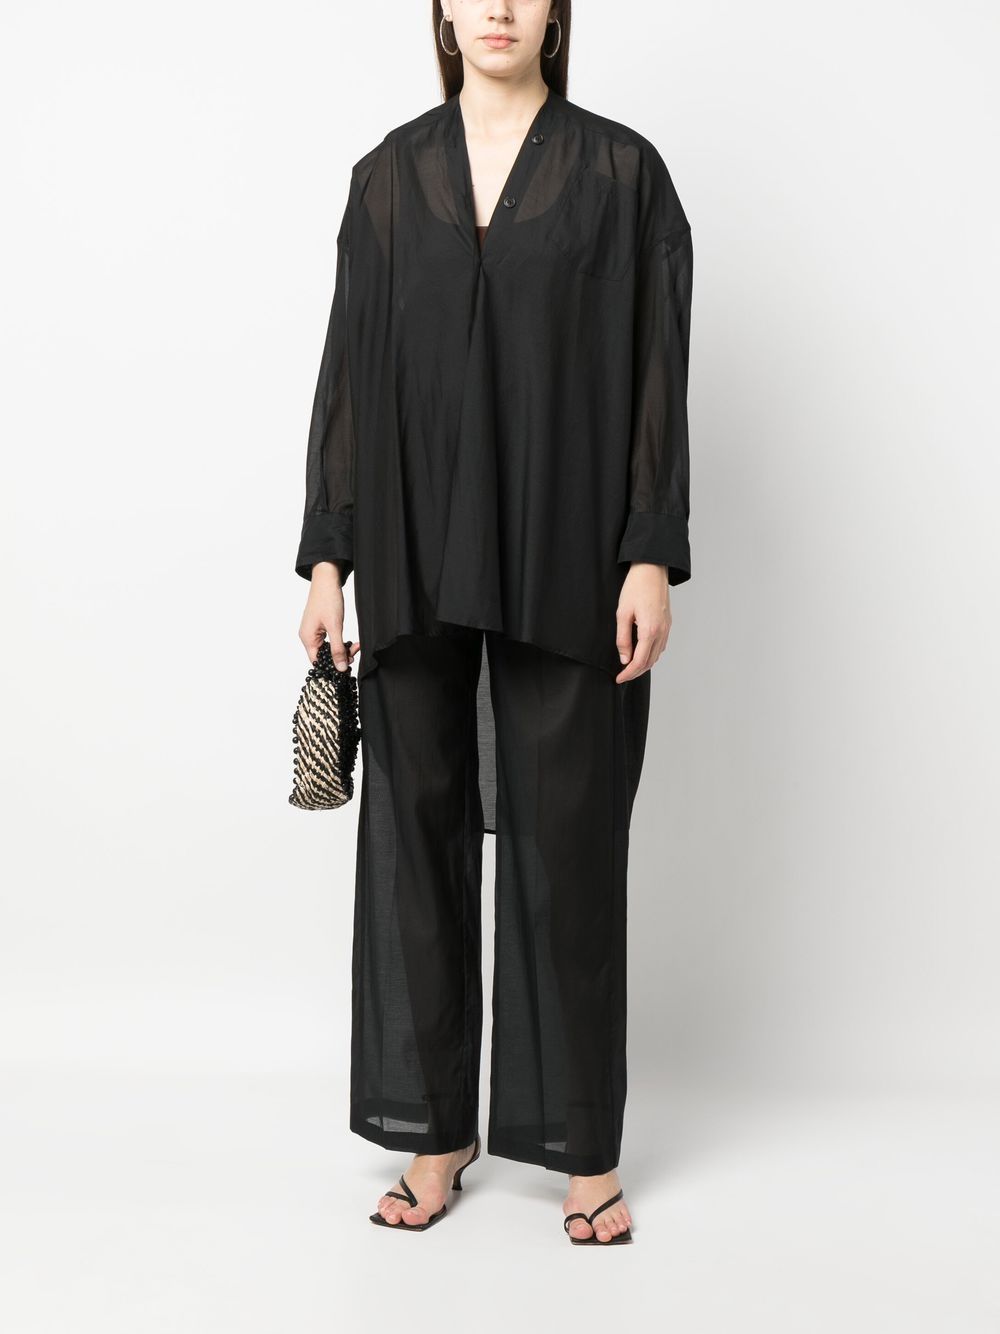 Erika Cavallini Semi Couture Shirts Black